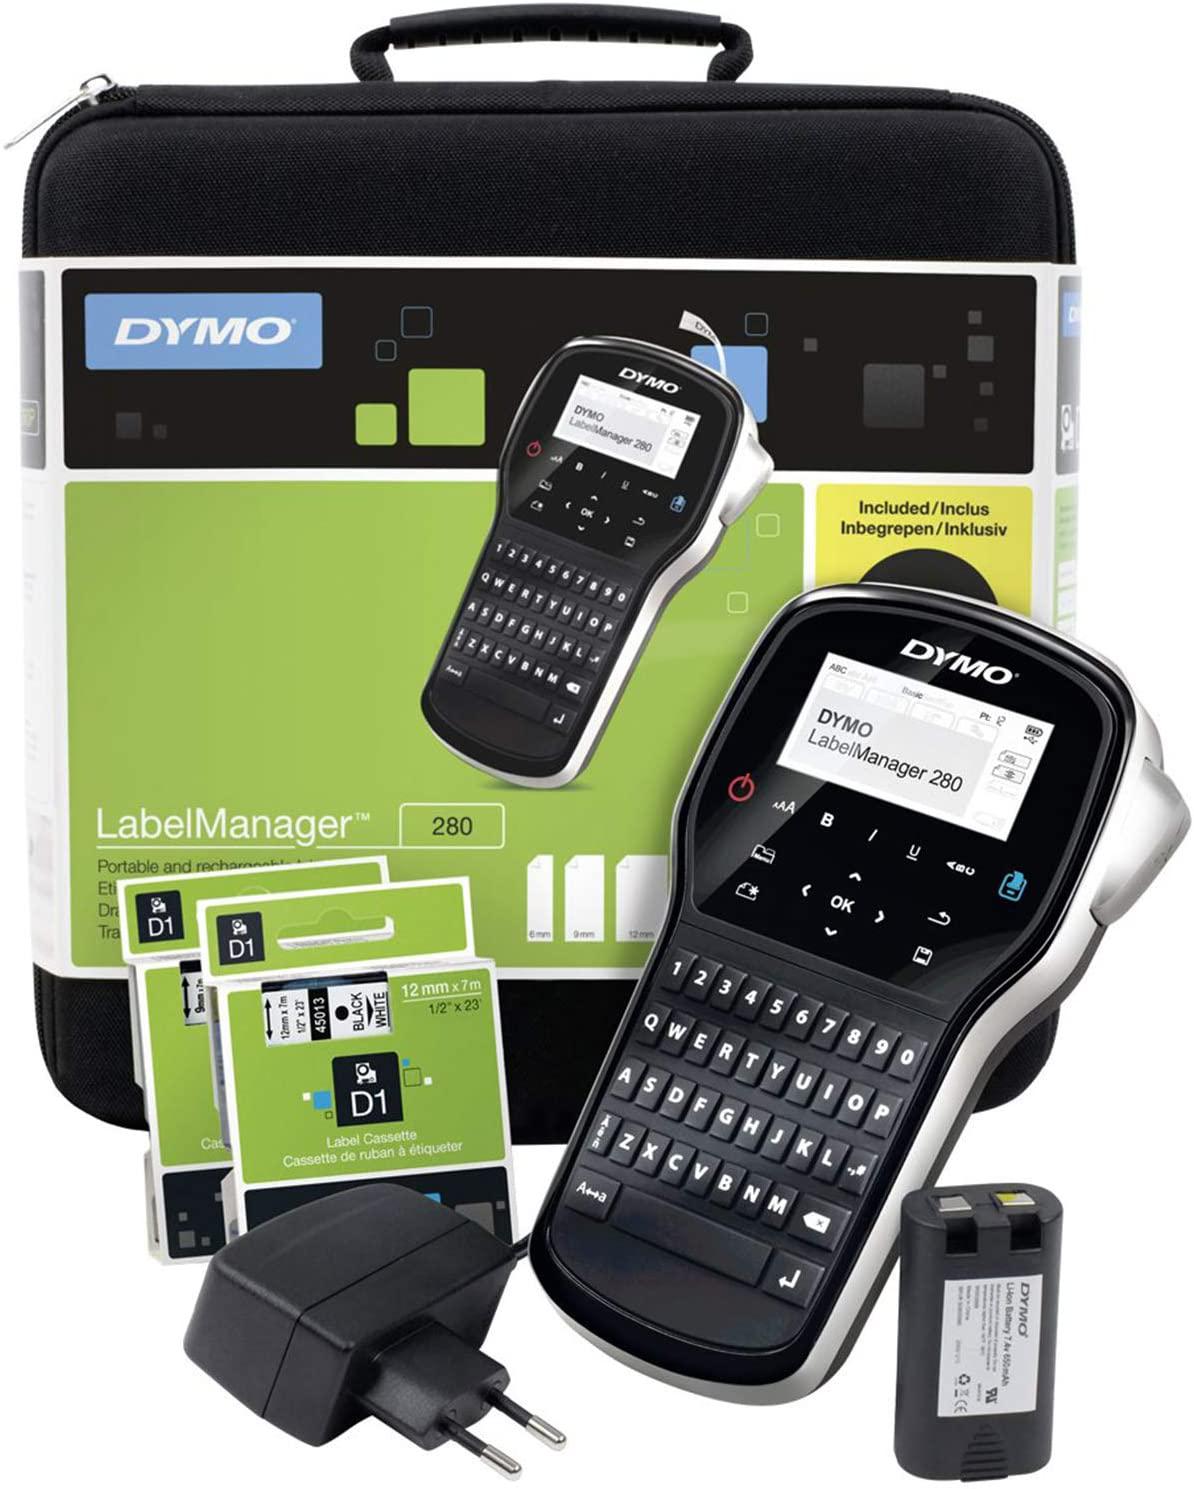 Dymo LabelManager 280 Kitcase Handheld Label Printer QWERTY Keyboard Black/Silver